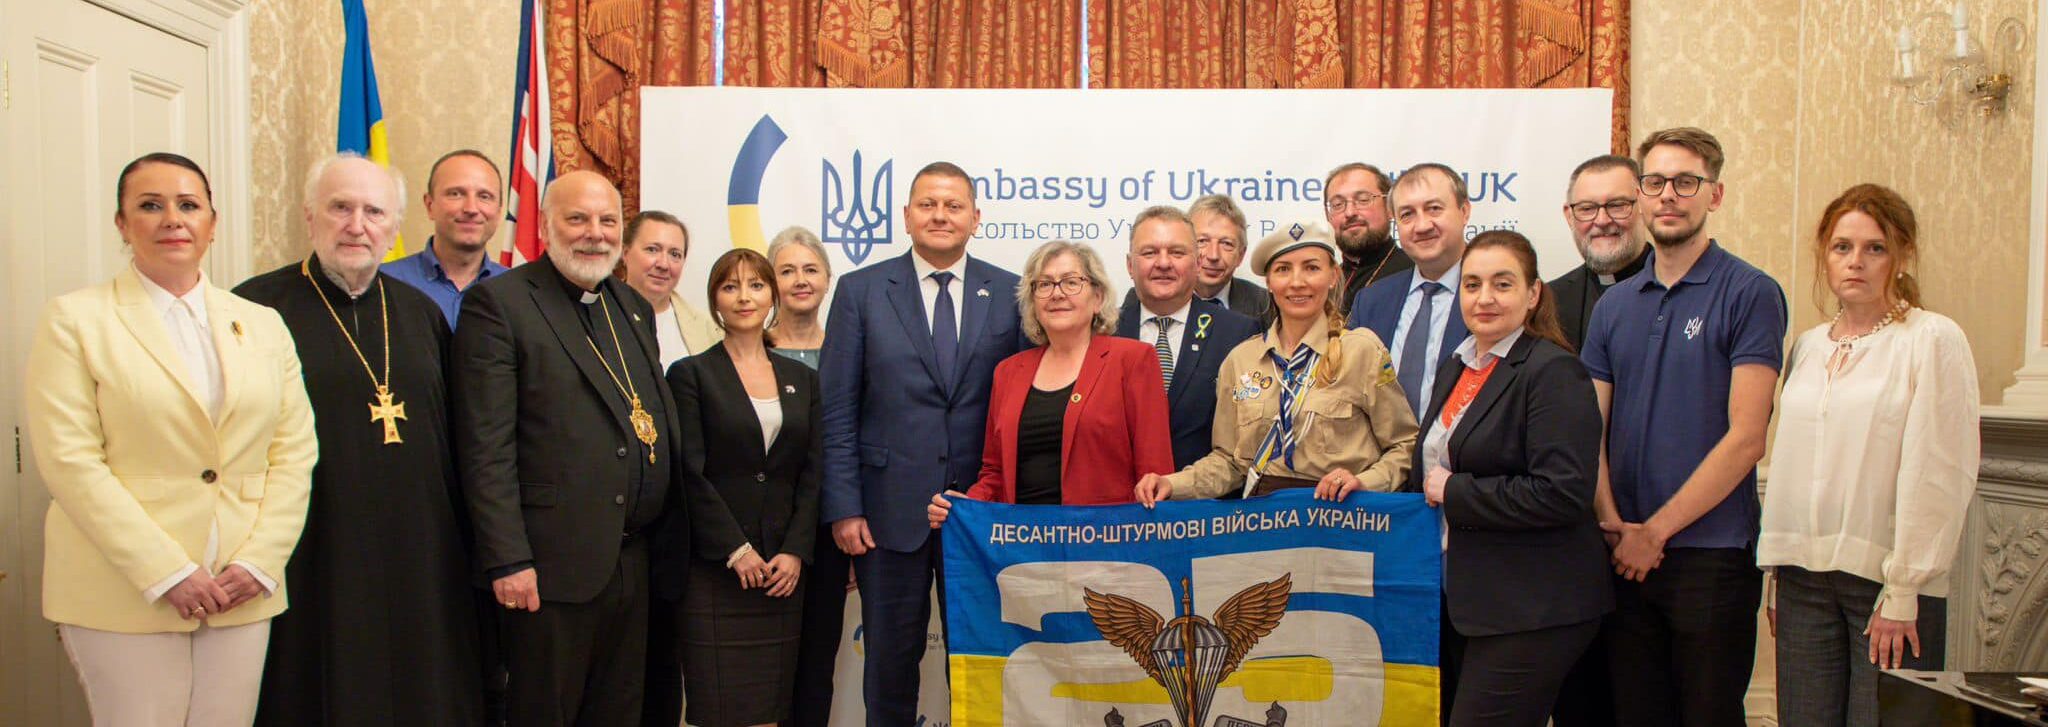 Ukrainians in United Kingdom meet with General Valerii Zaluzhnyi